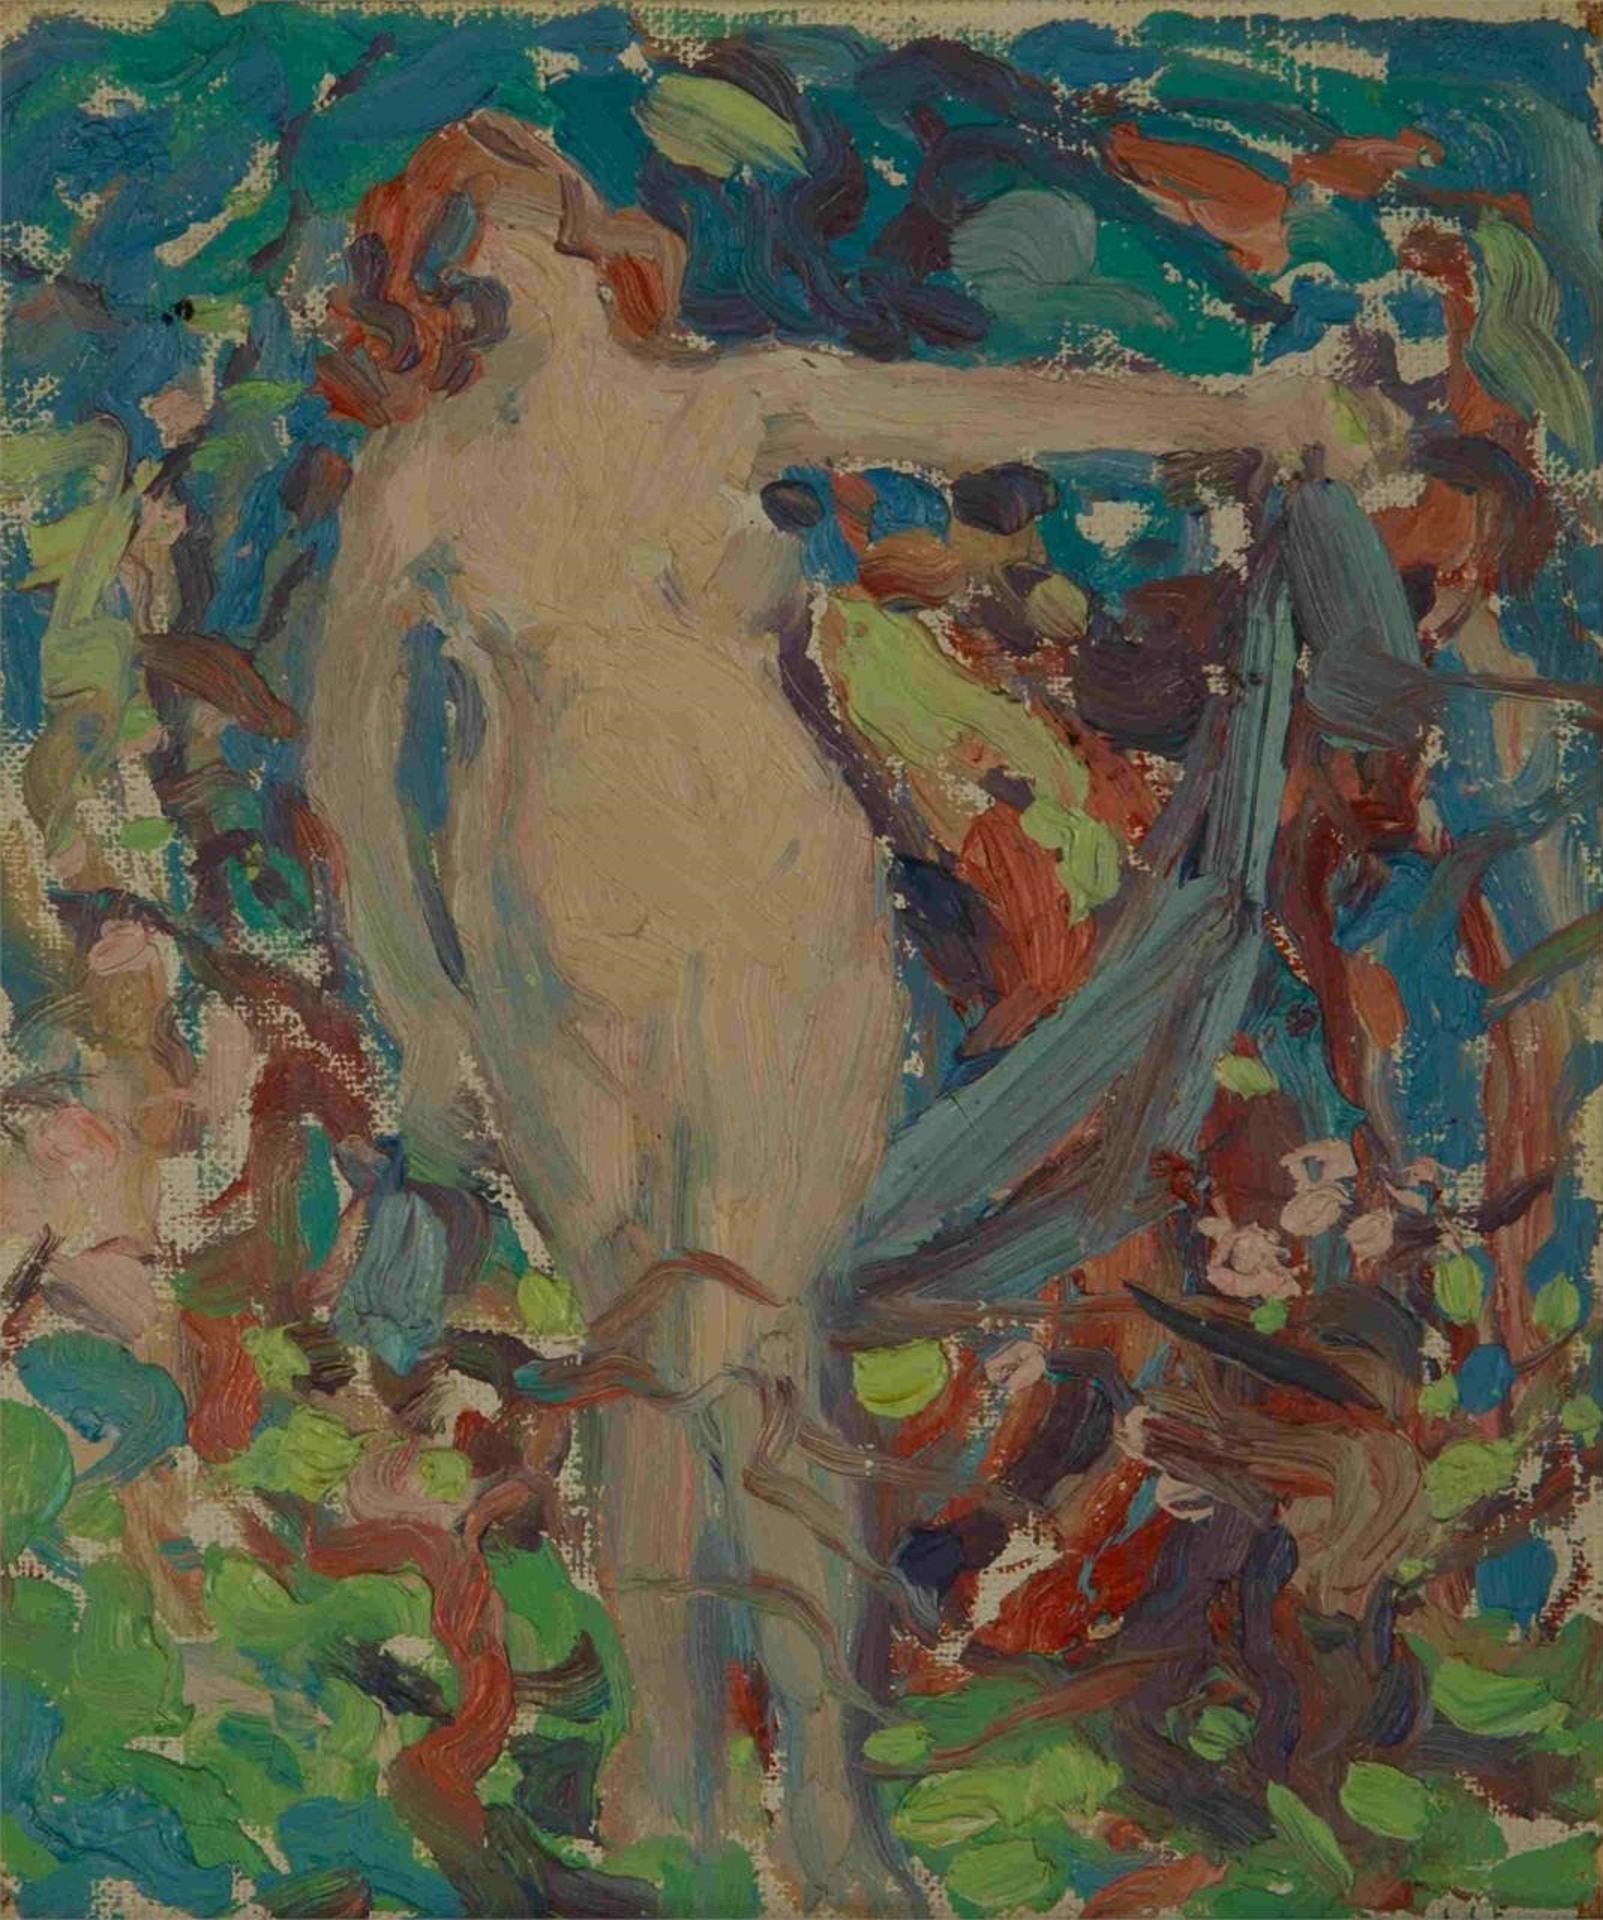 Lionel Lemoine FitzGerald (1890-1956) - Nude in Woods